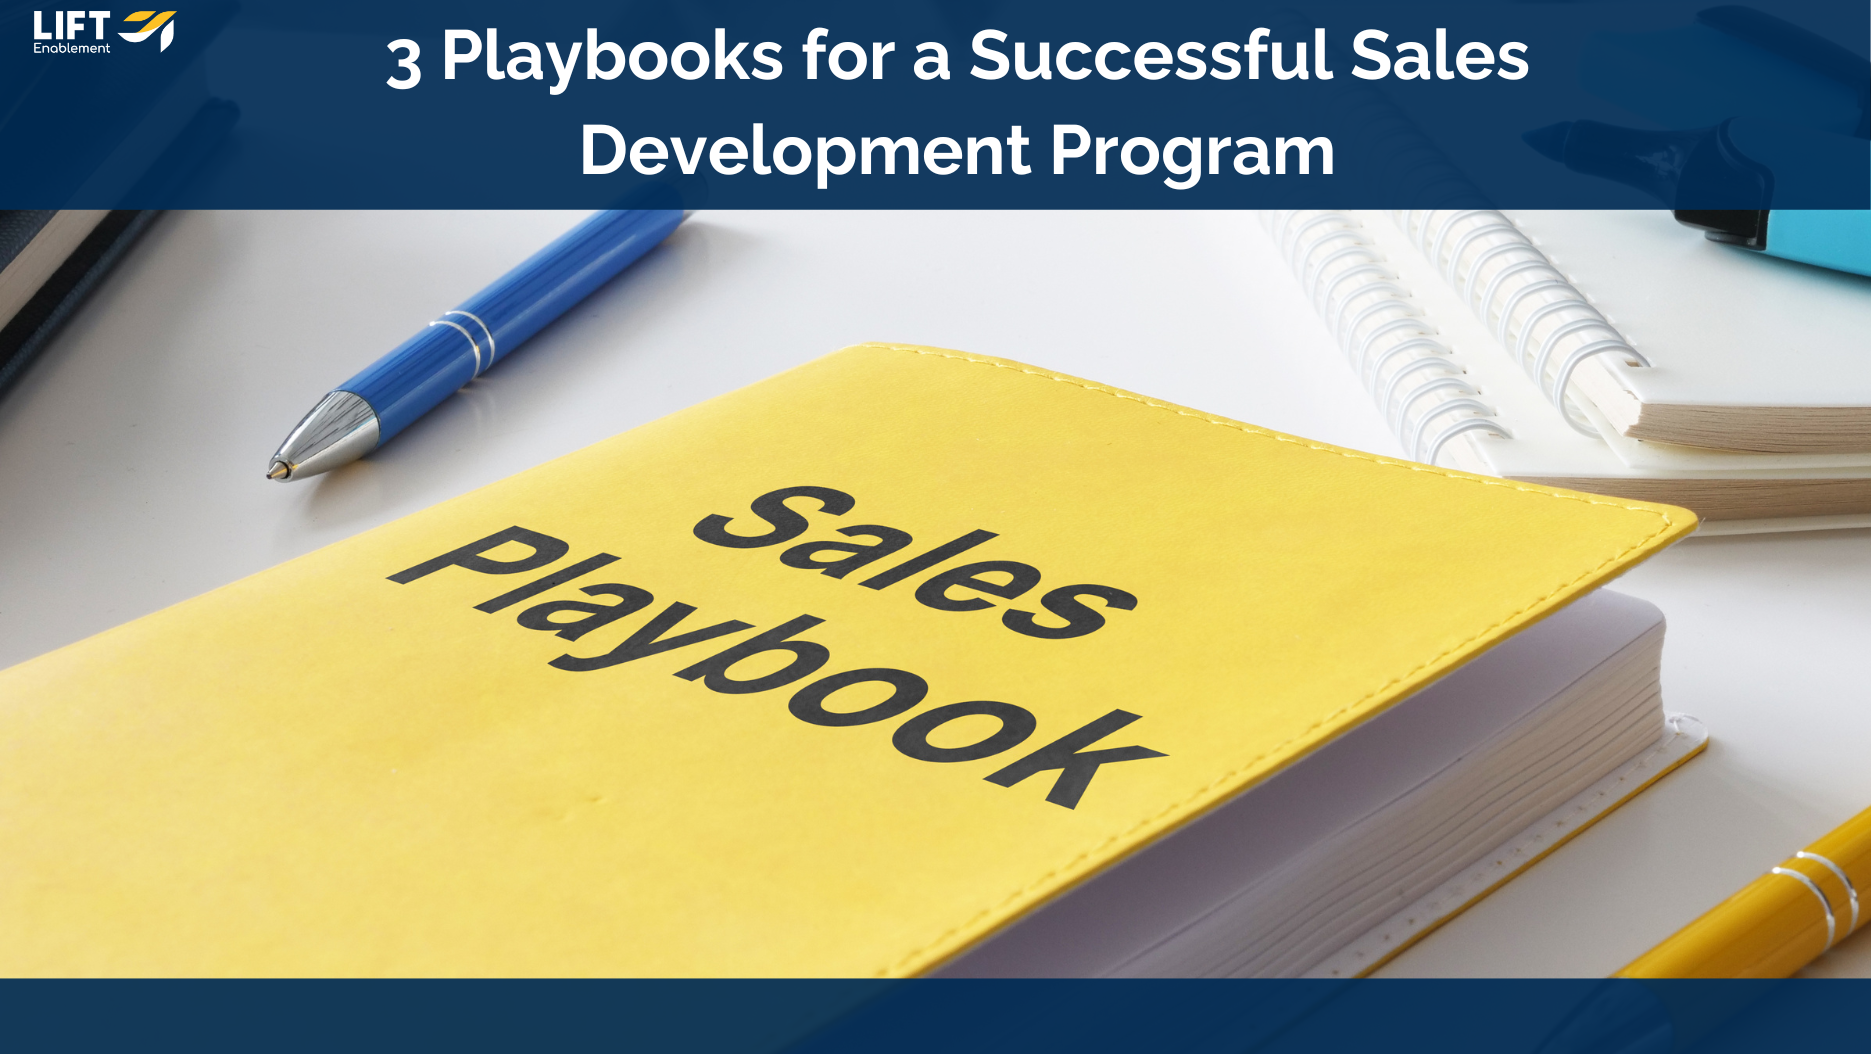 3 Playbooks for Sales Development